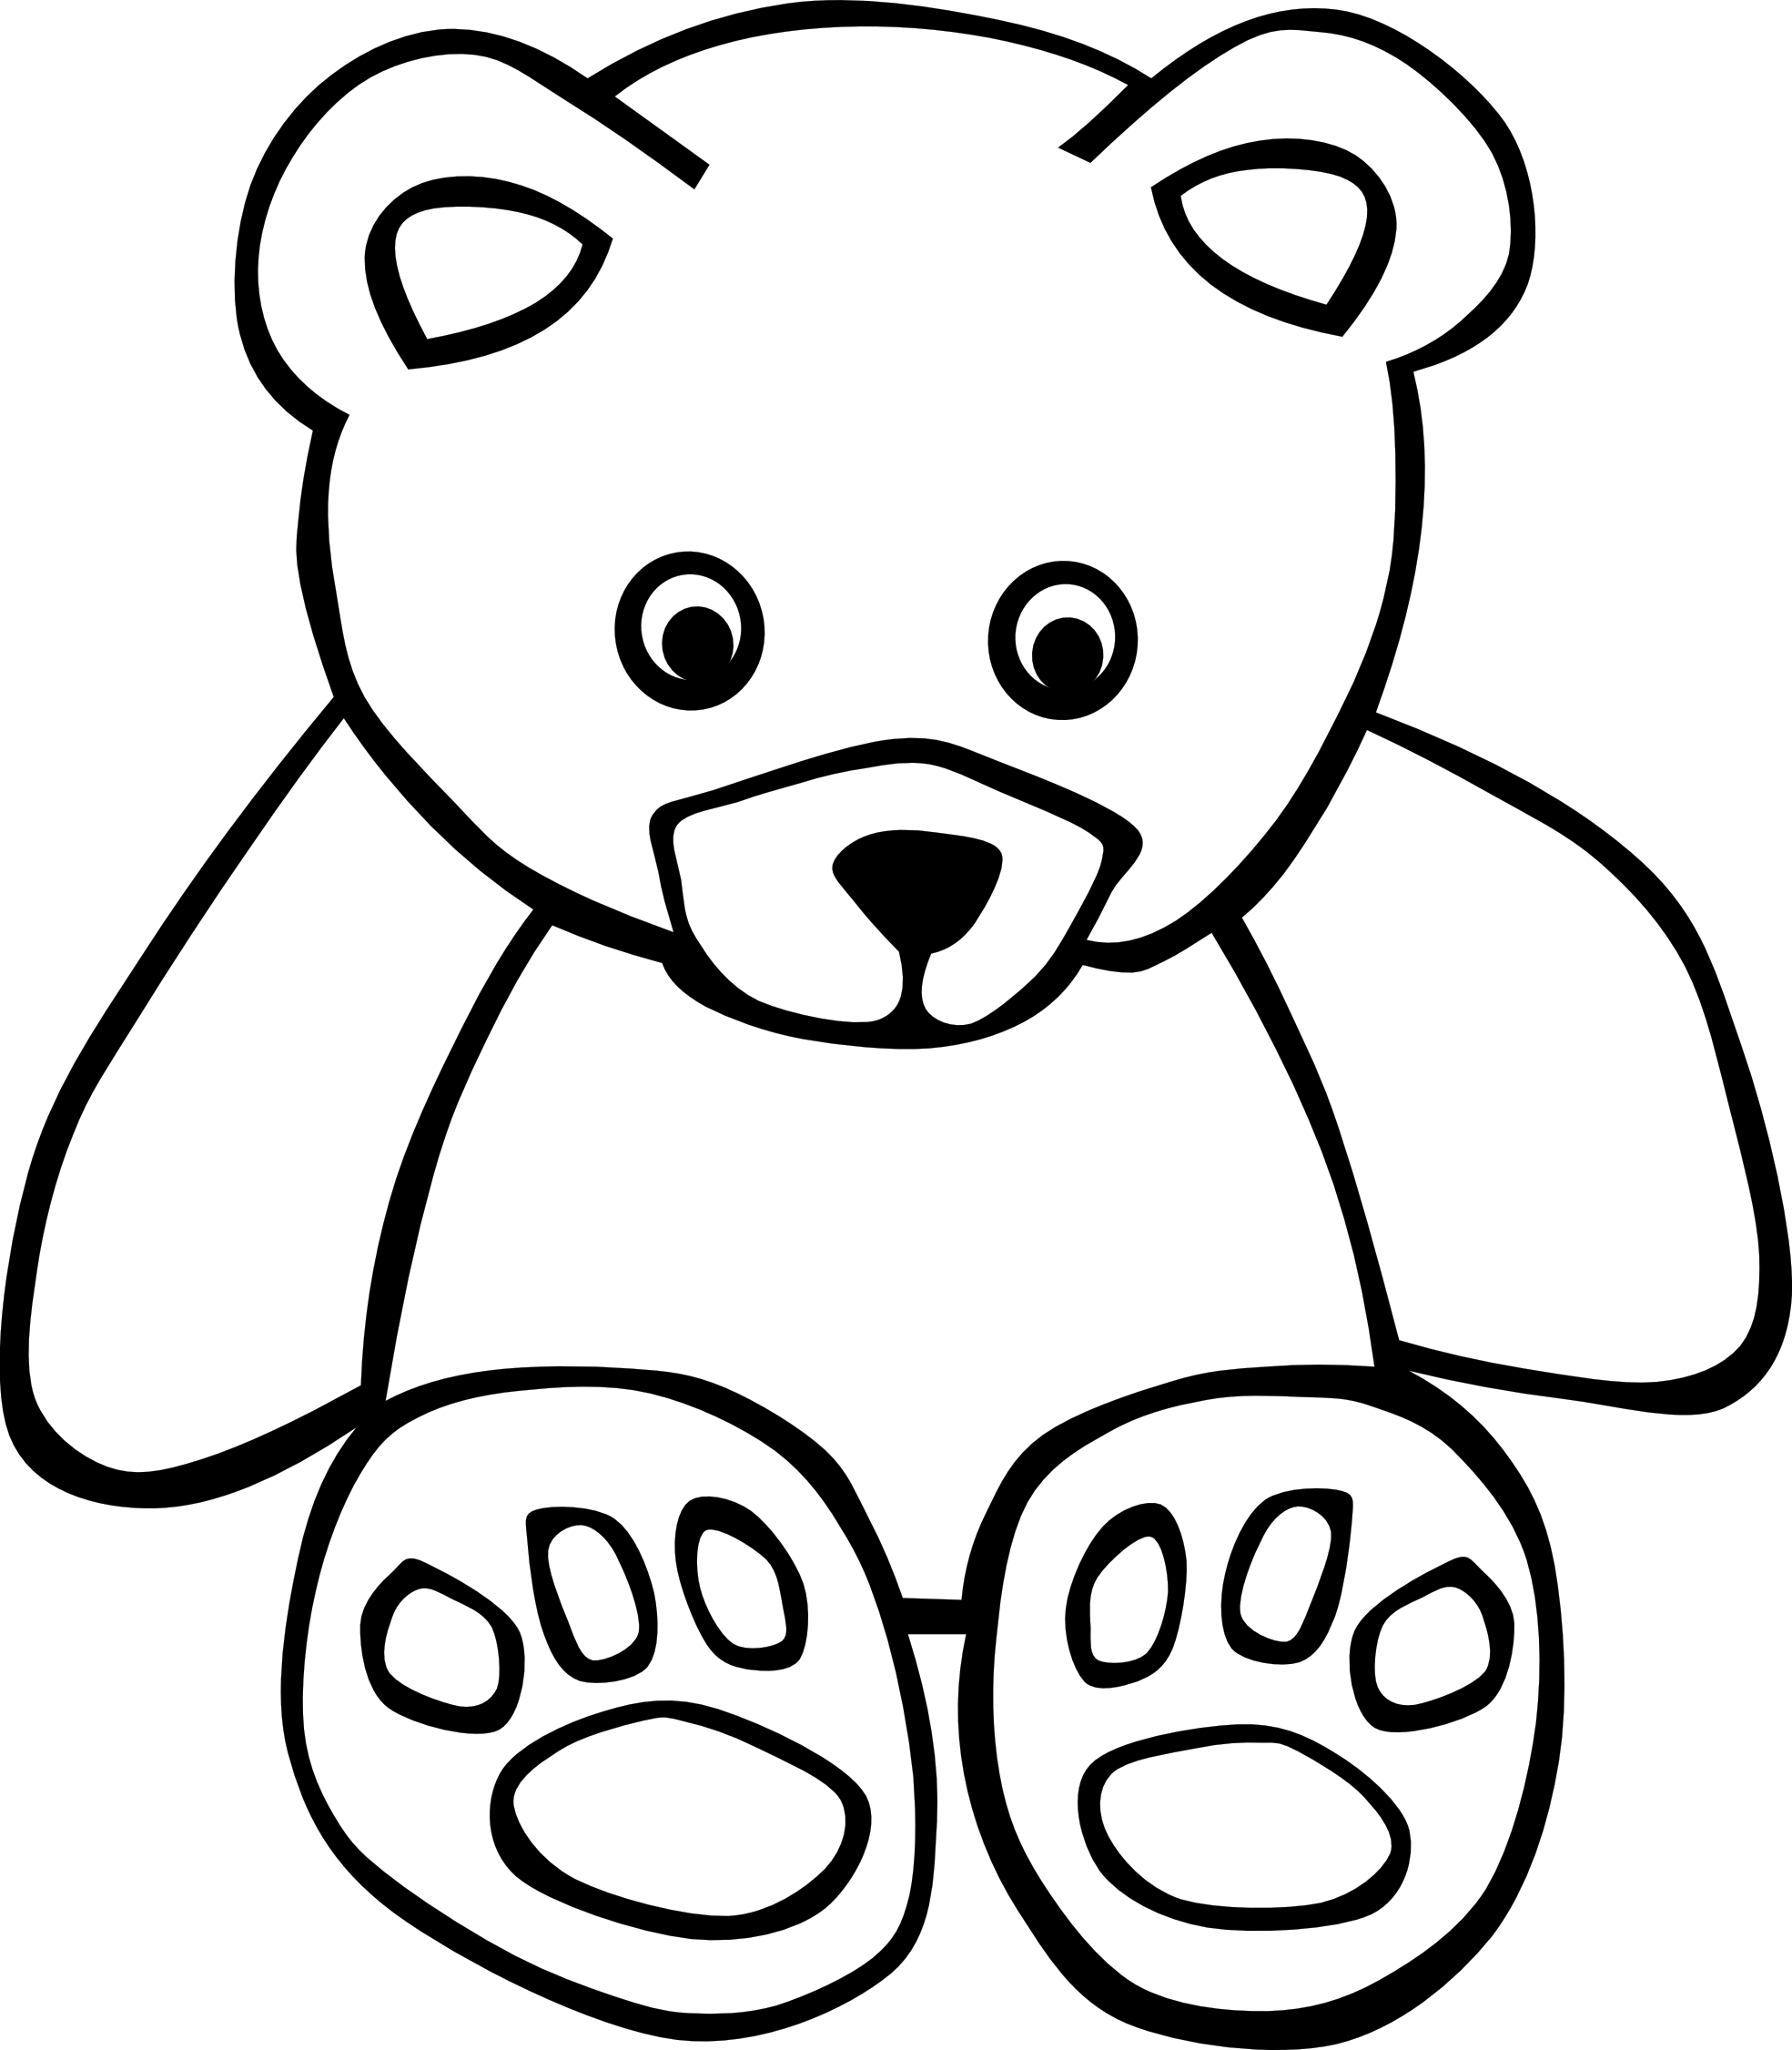 Free Teddy Bear Draw, Download Free Clip Art, Free Clip Art